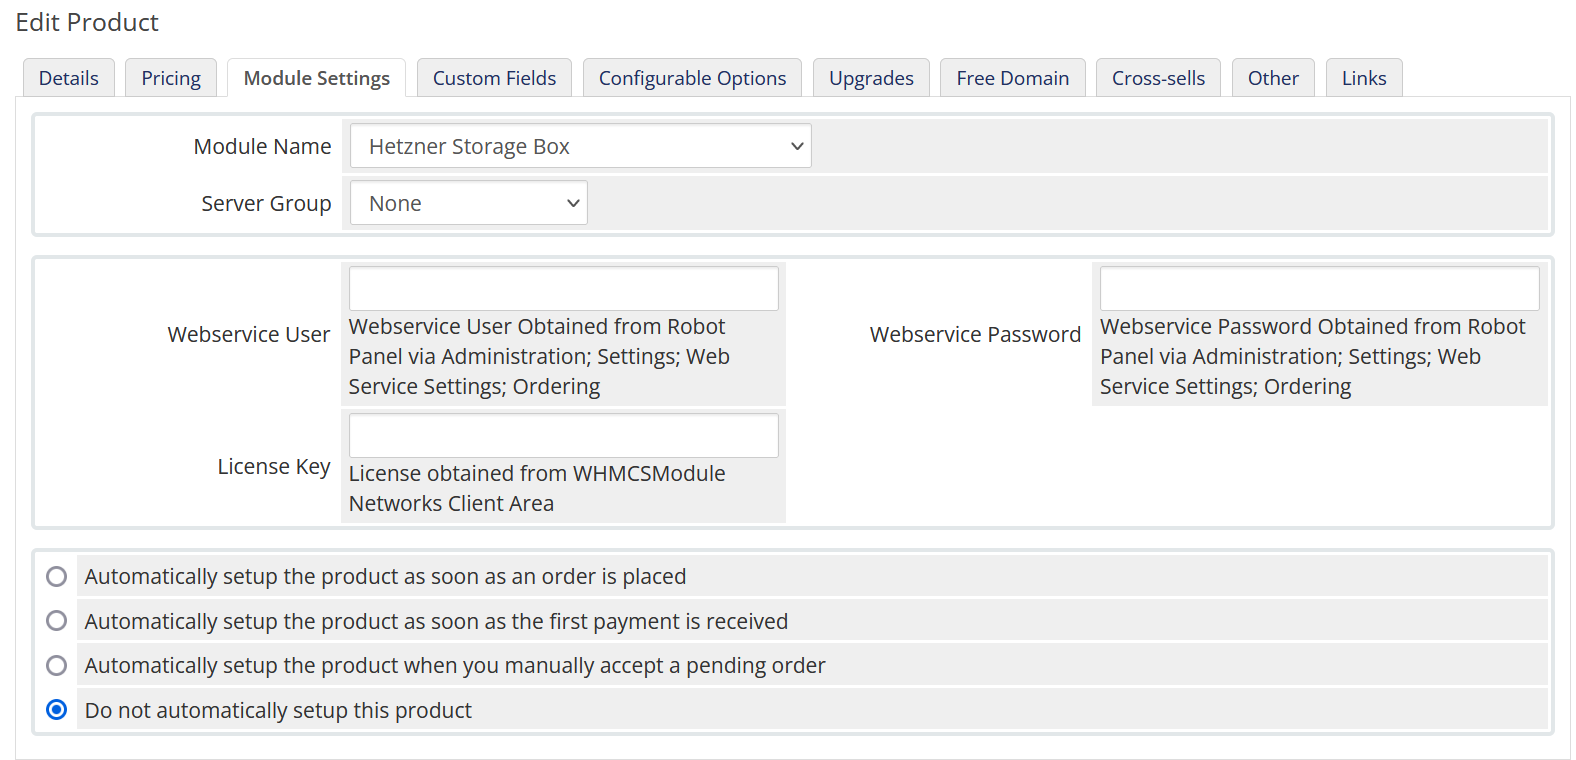 Hetzner Storage Box WHMCS Module